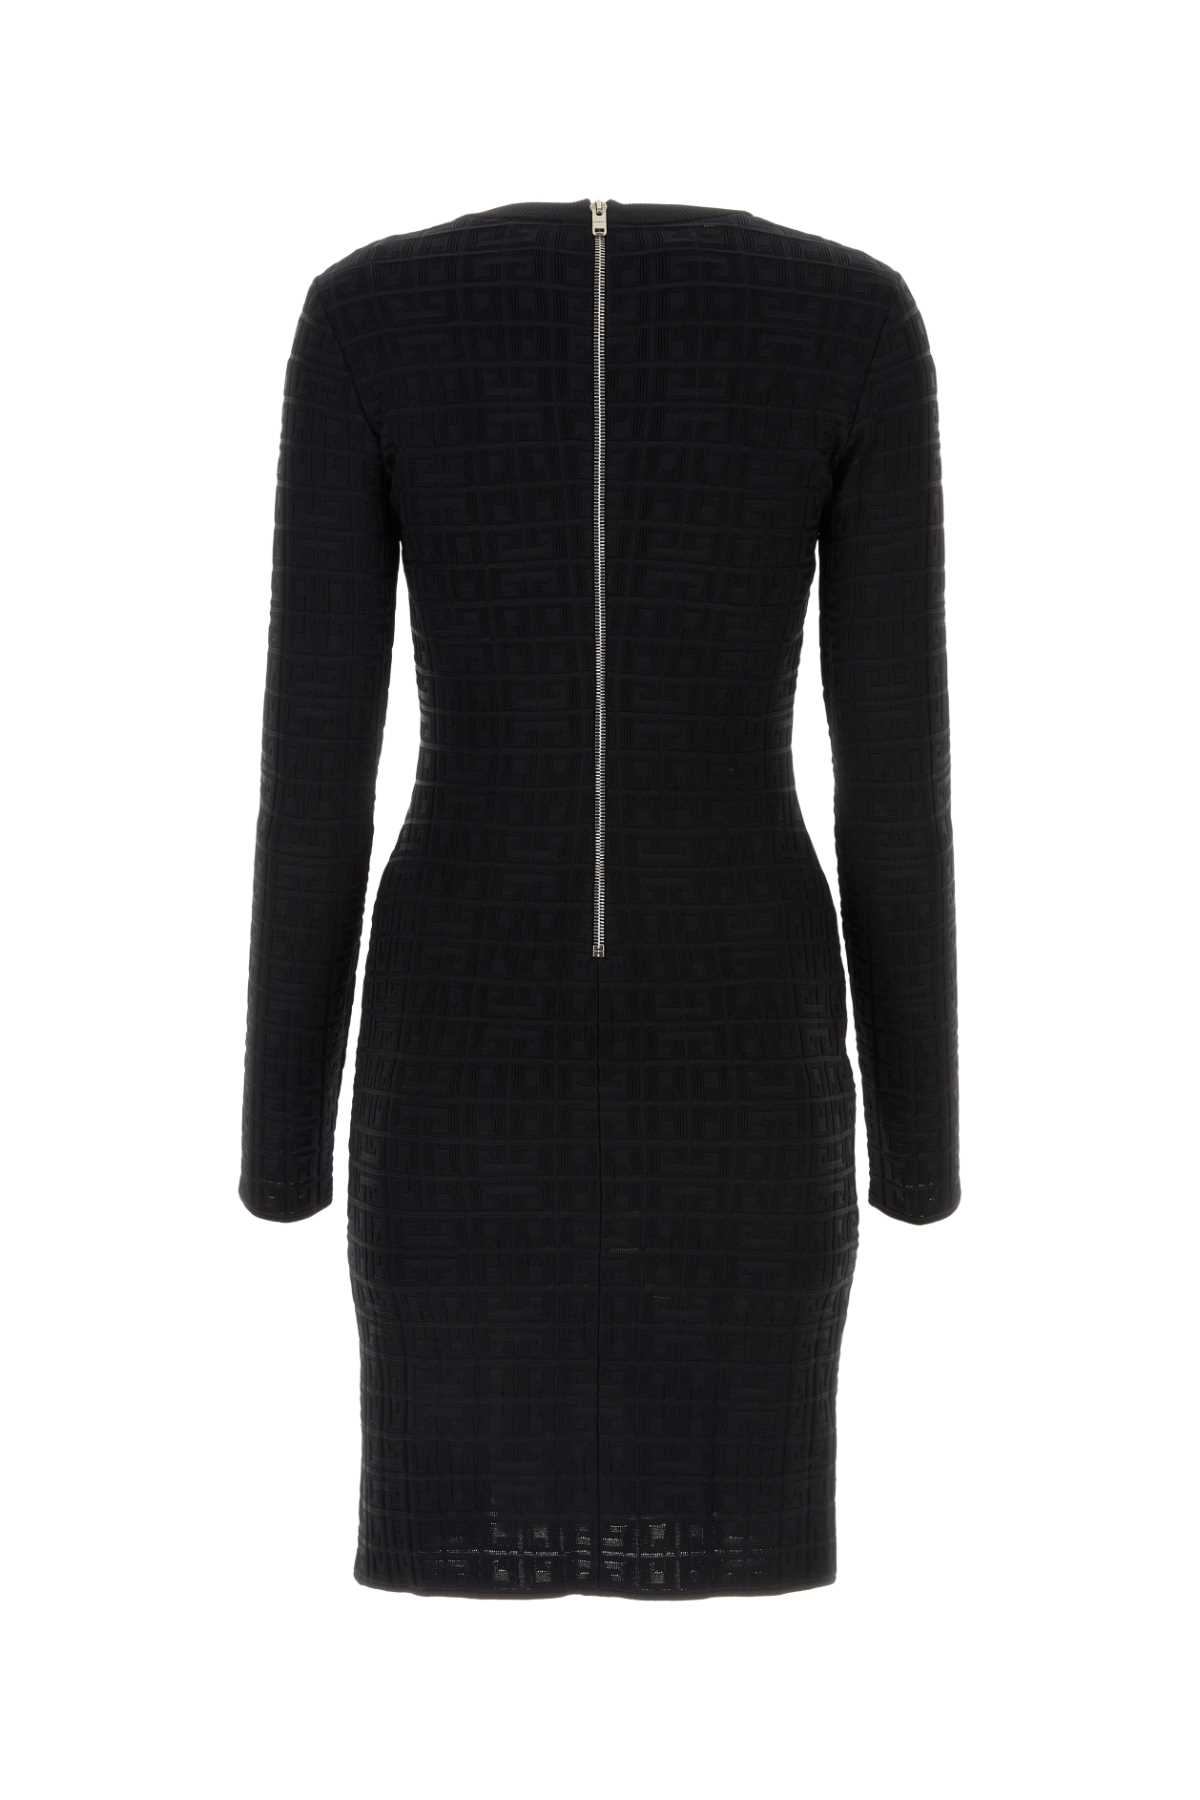 Shop Givenchy Black Jacquard Dress